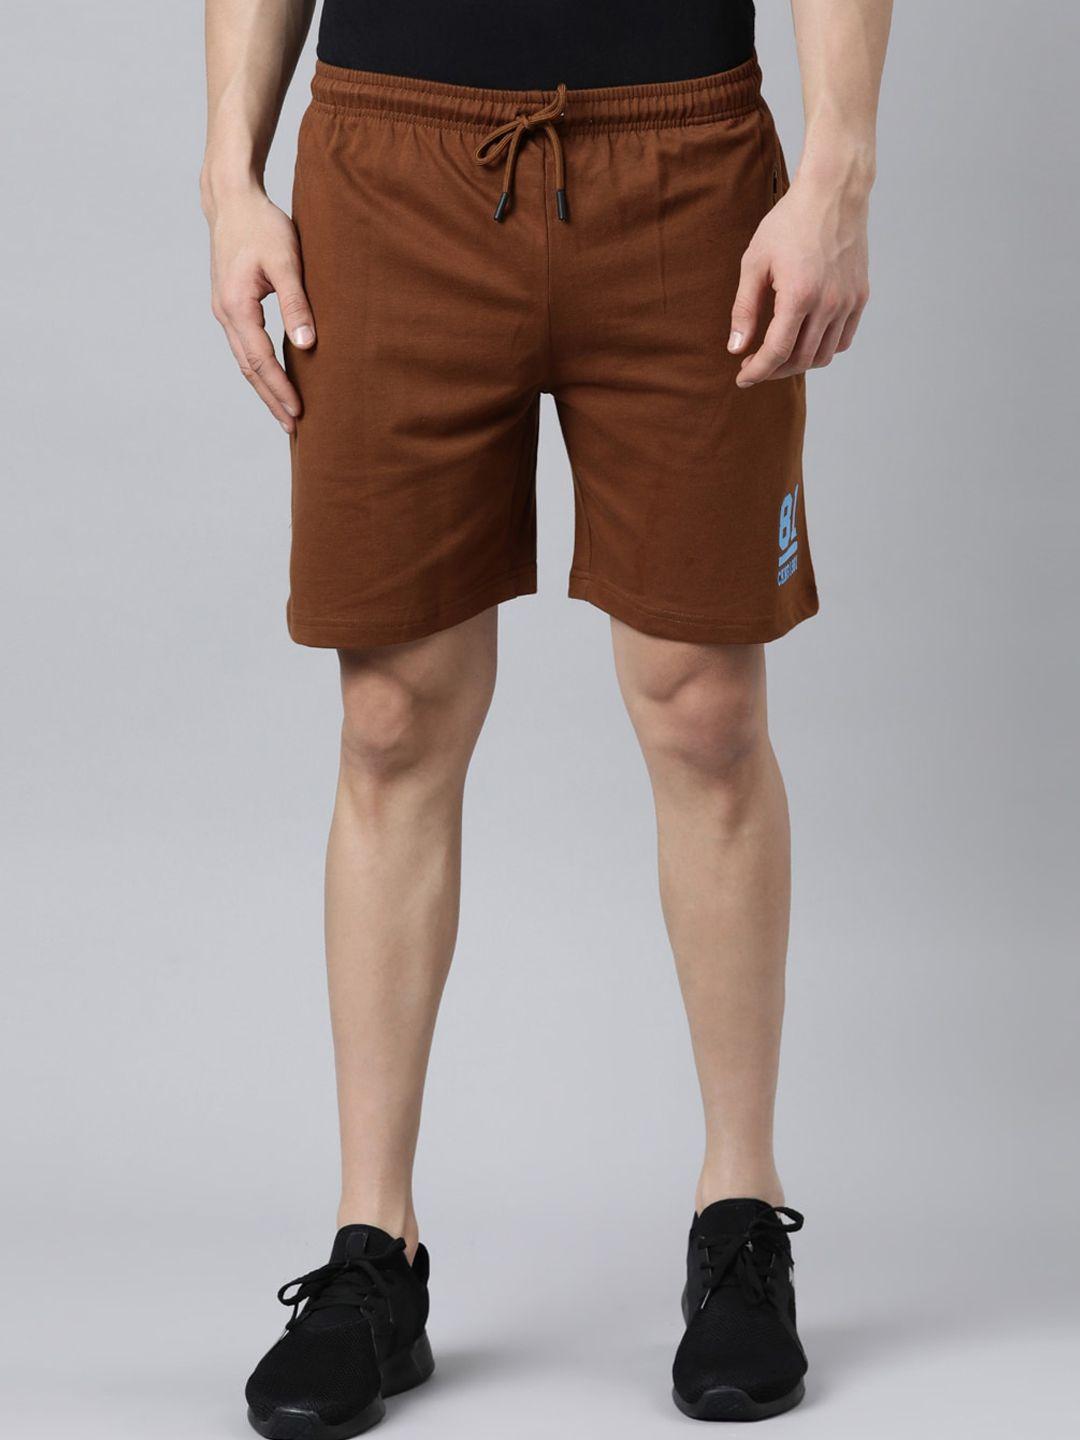 chennis men pure cotton regular fit sports shorts